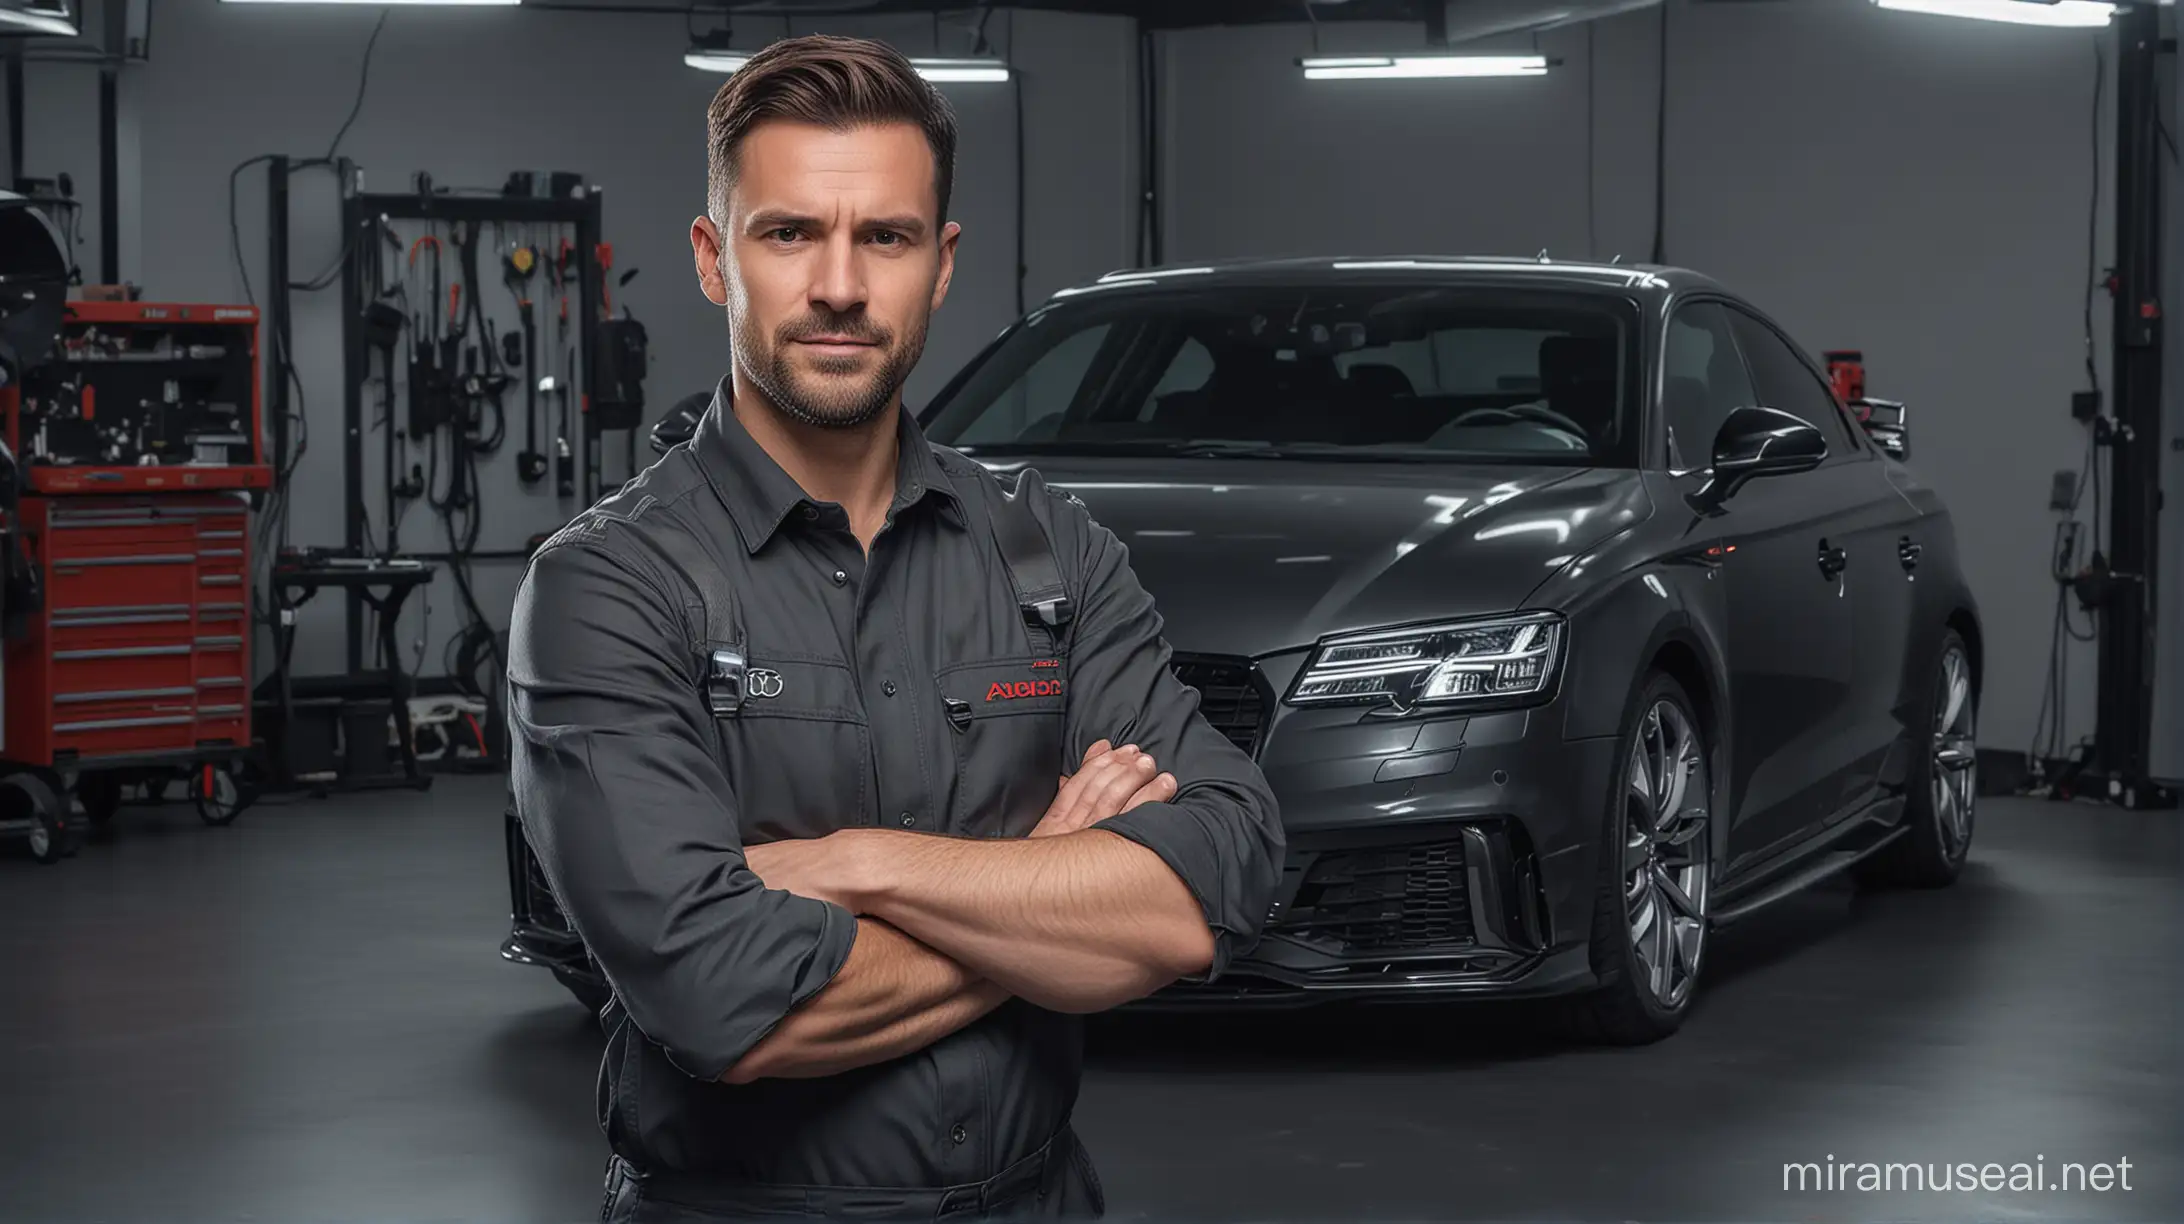 Experienced European Mechanic Showcasing Audi in Studio Photoshoot